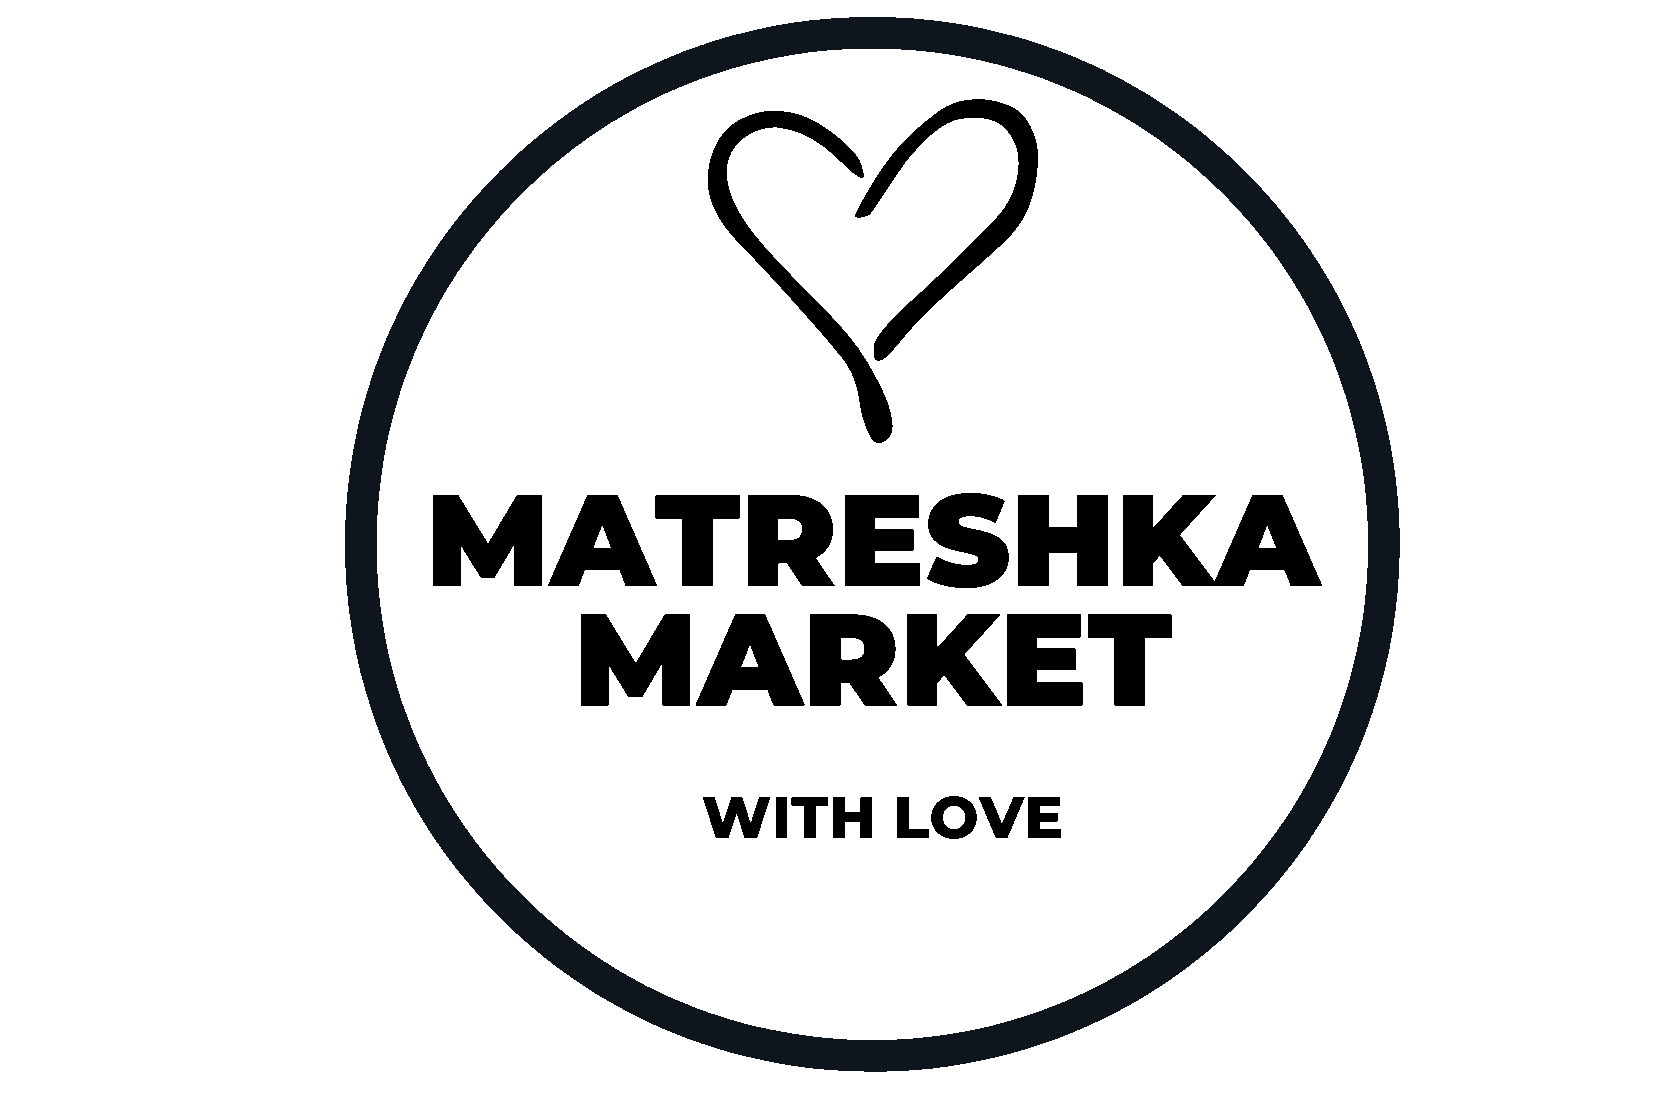 Matreshka market